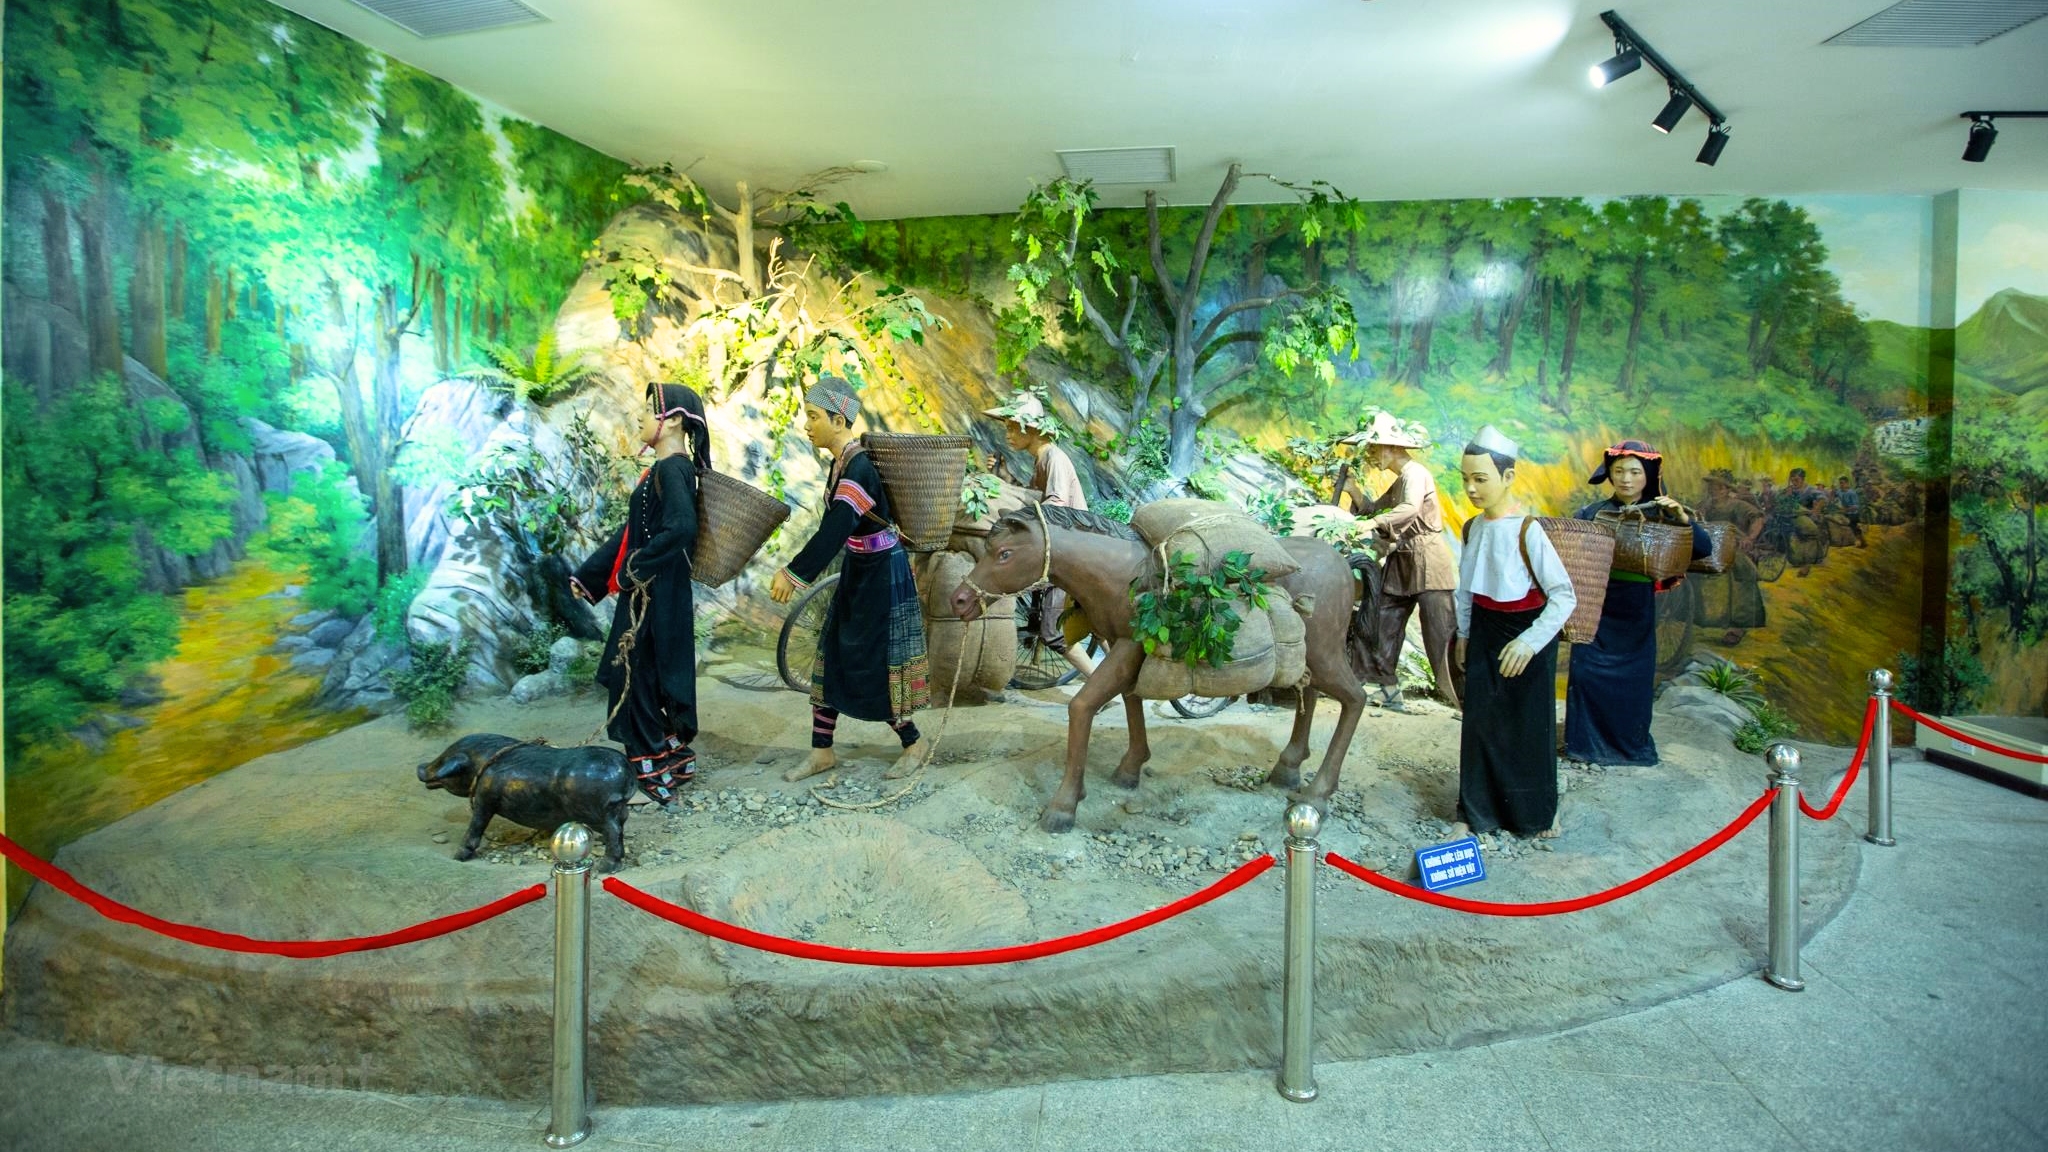 Day 7 Get A Glimpse Of Vietnam History Through Dien Bien Phu Museum